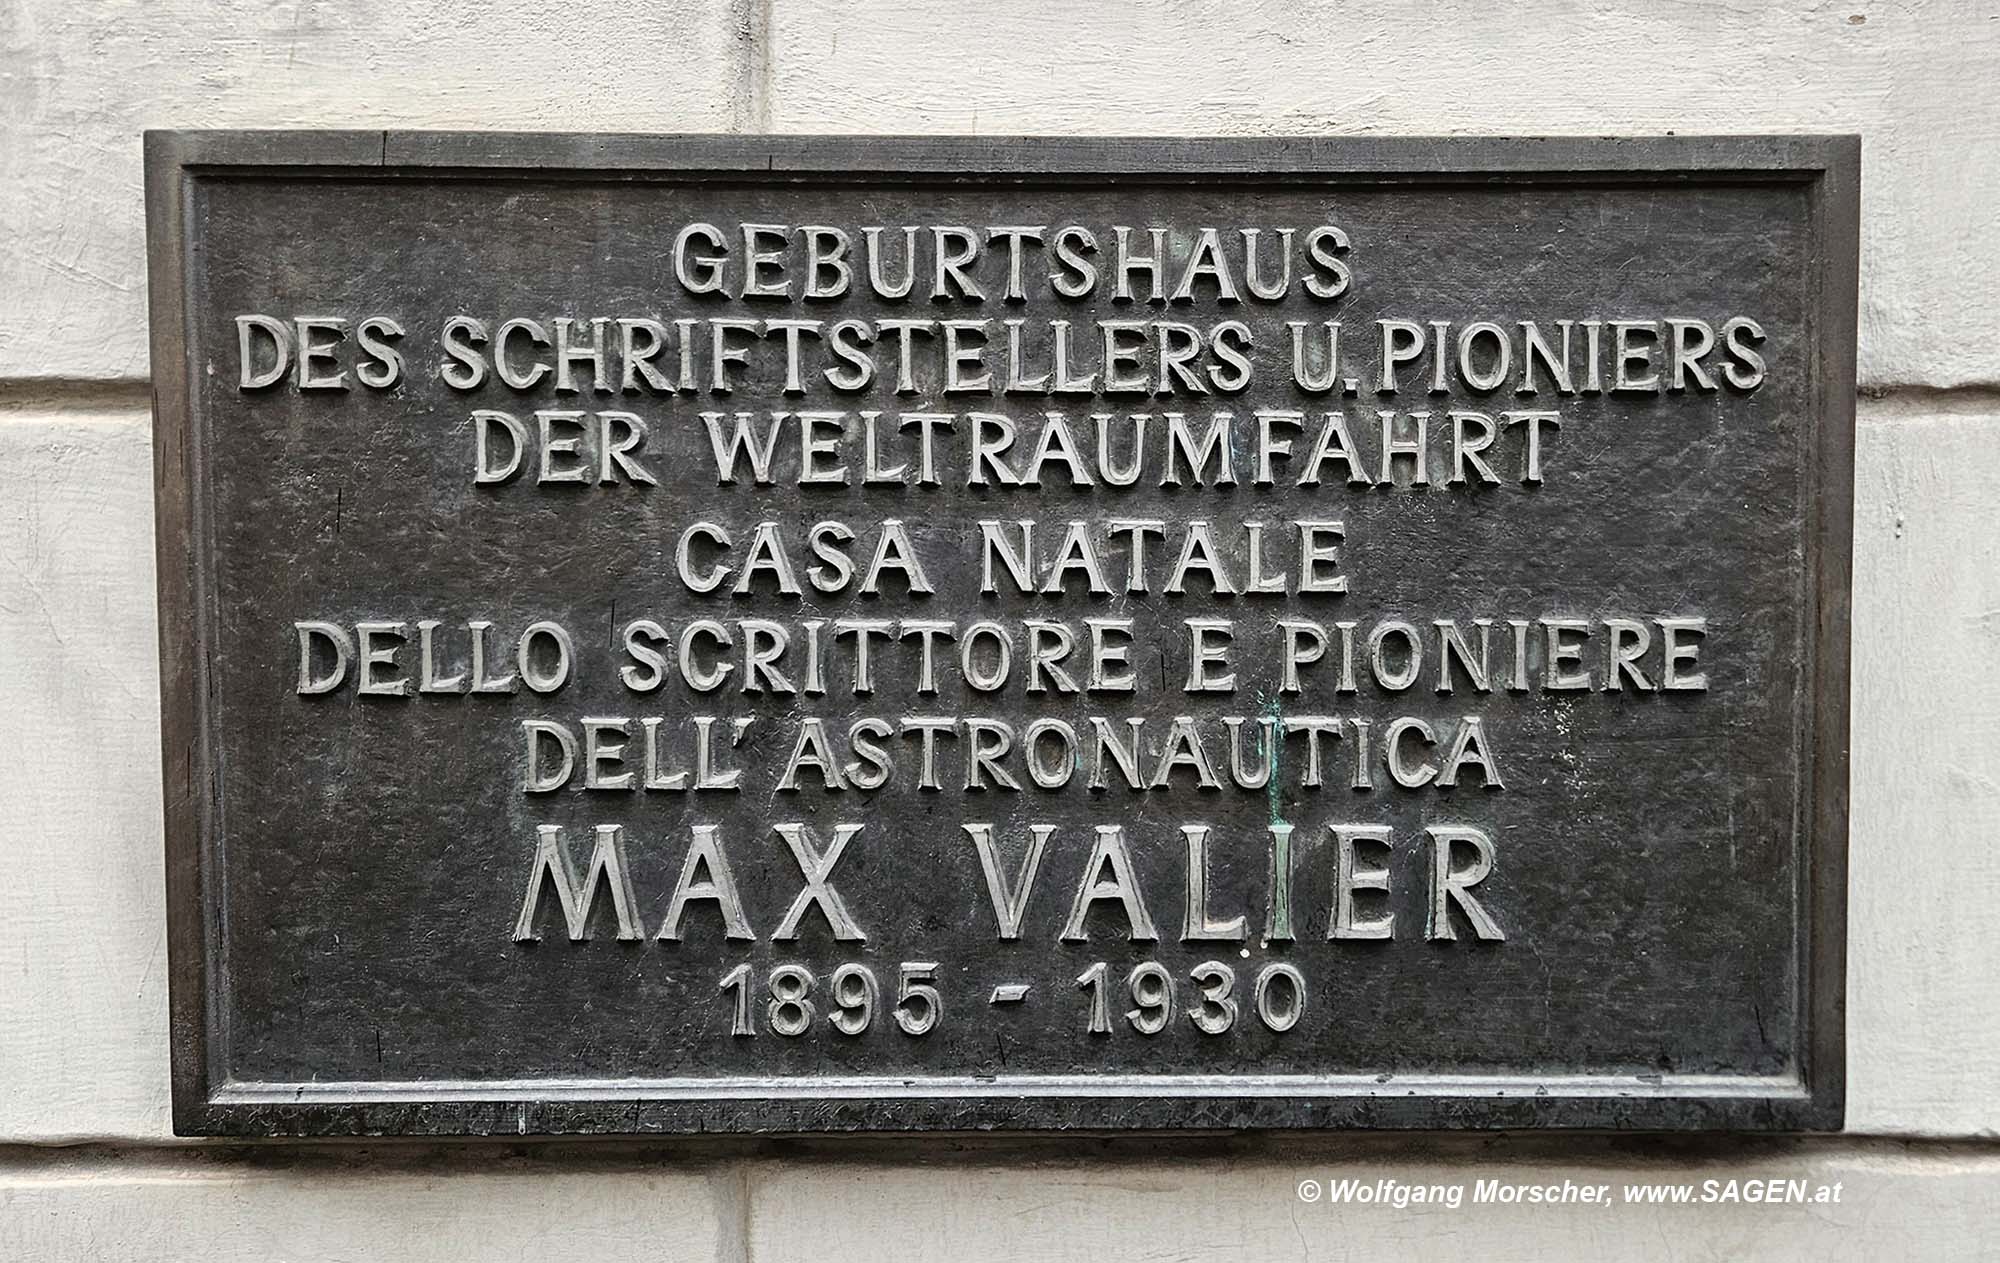 Gedenktafel Geburtshaus Max Valier Bozen